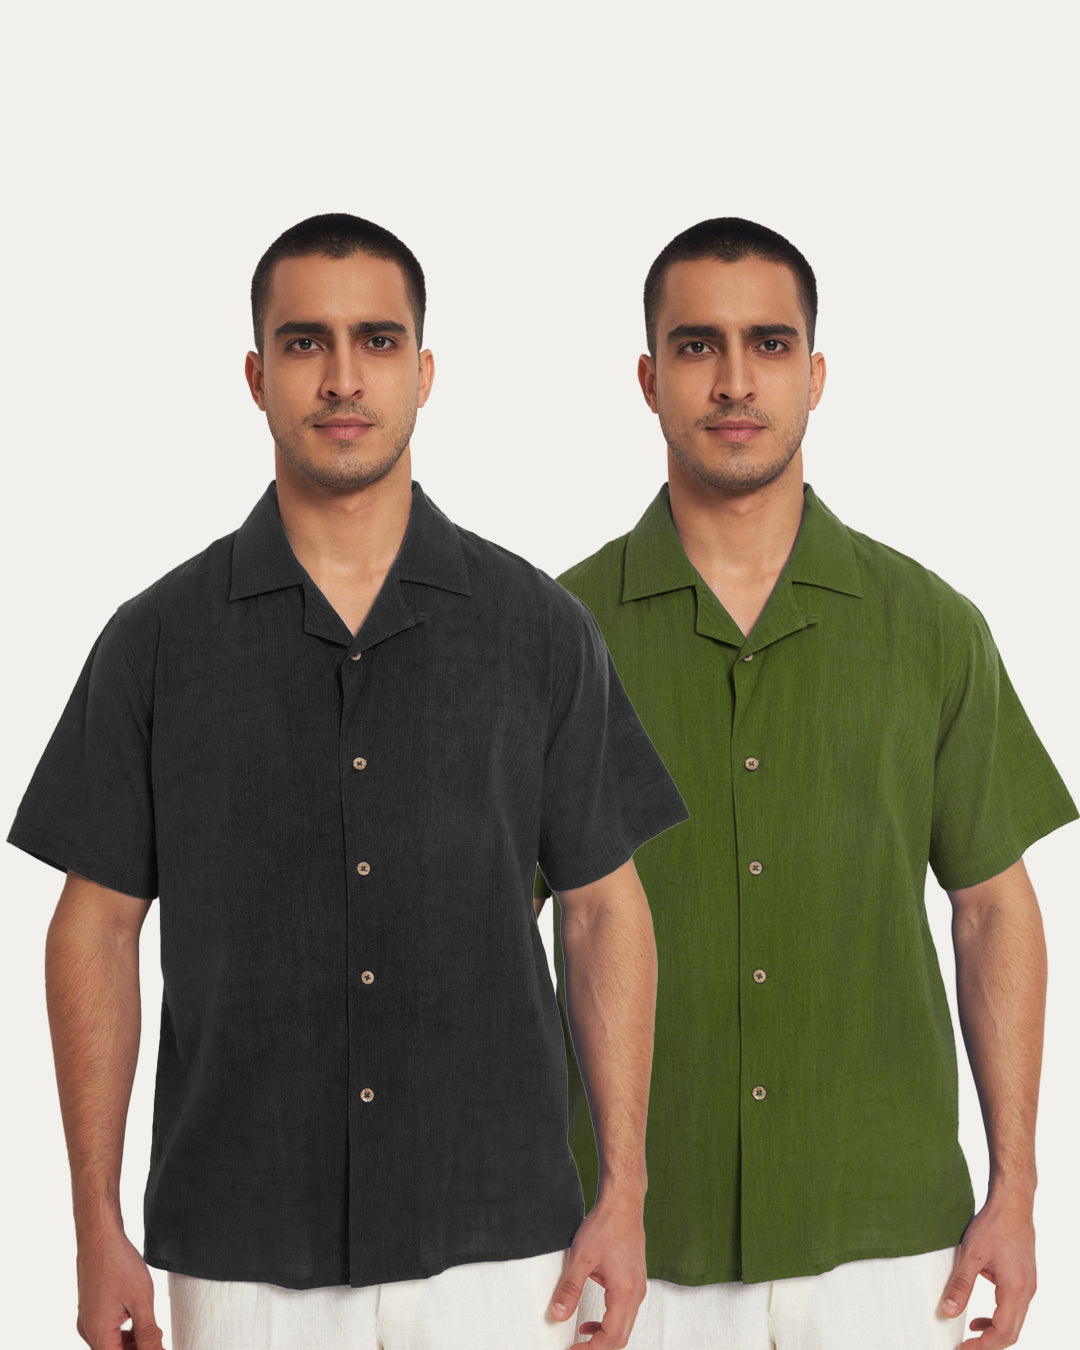 Combo : Classic Spring Green & Black Men's Half Sleeves Shirt